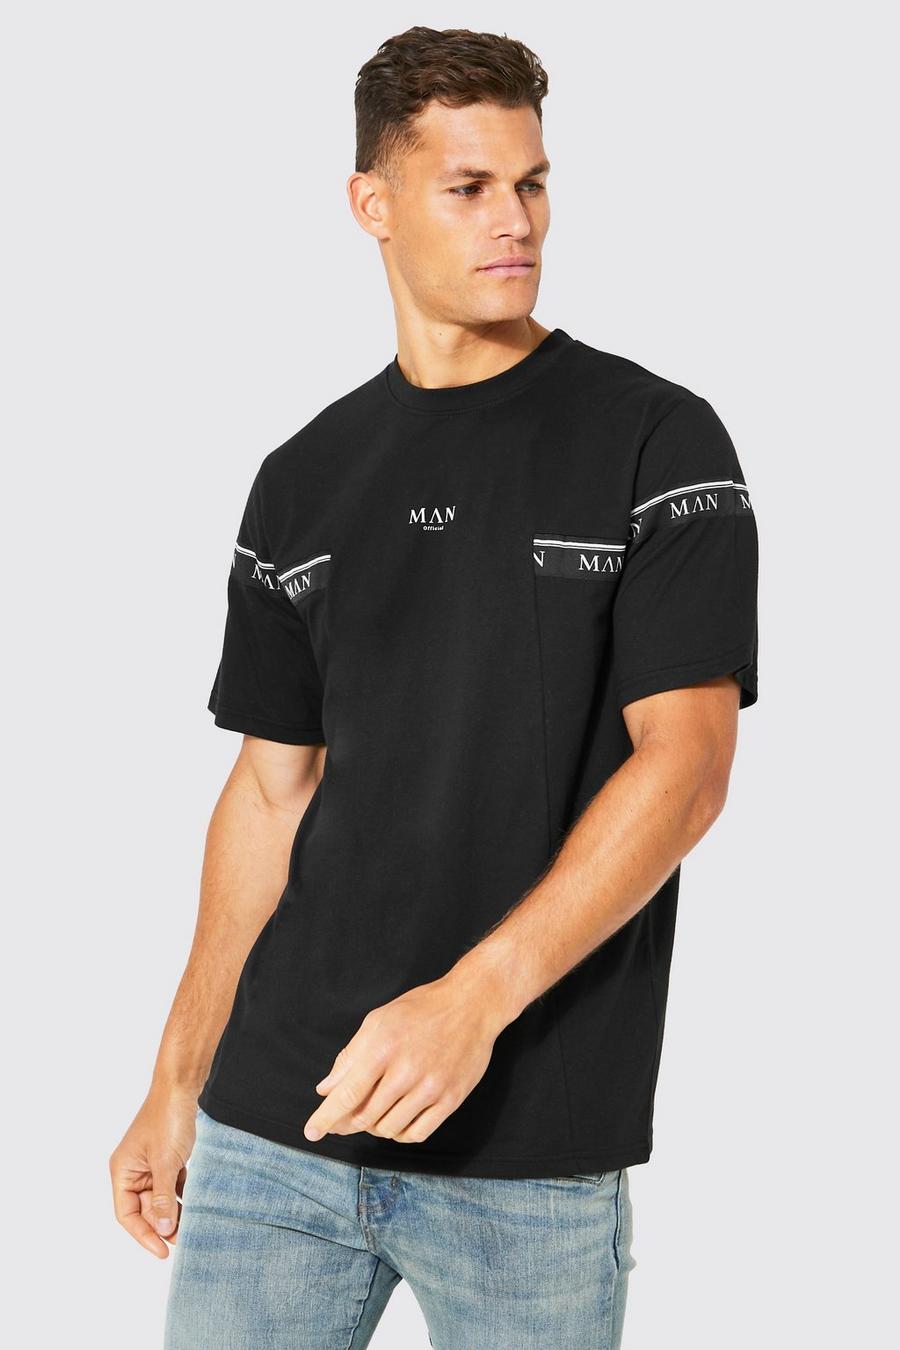 Black Tall Roman Man T-shirt With Tape